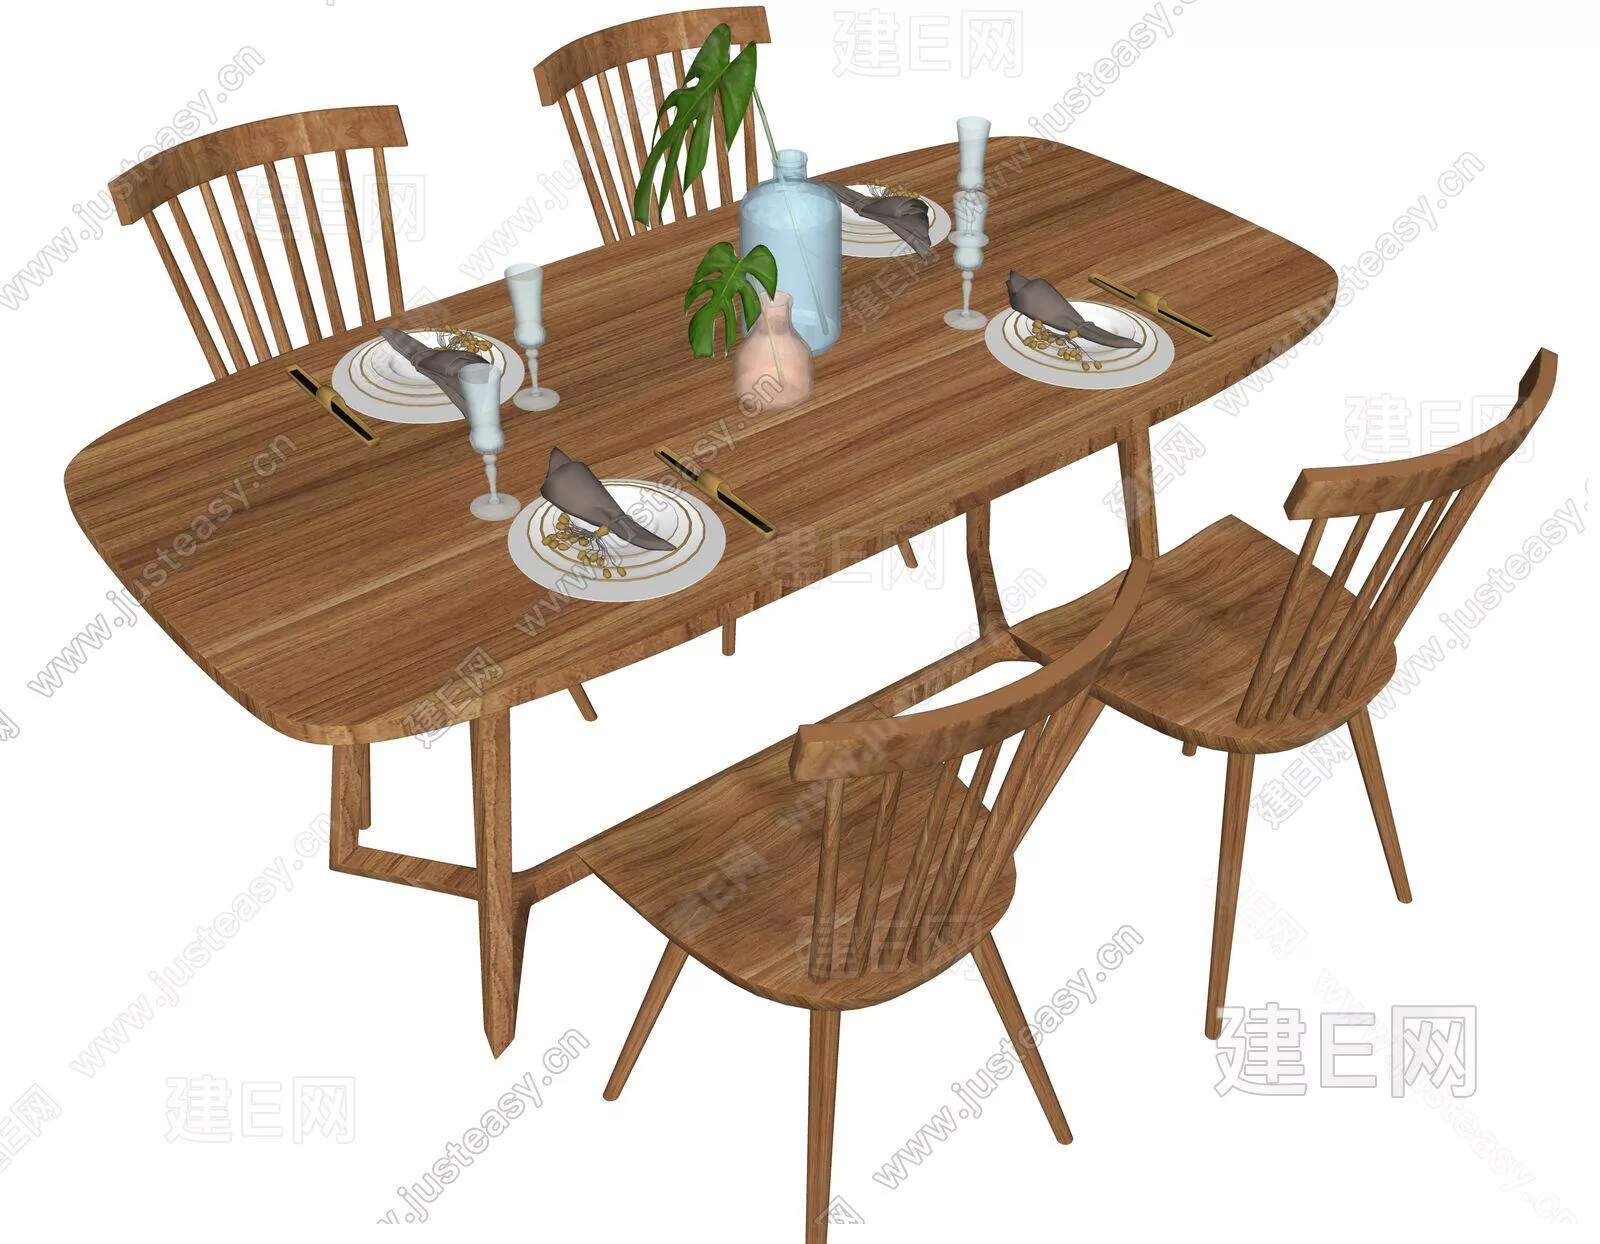 NORDIC DINING TABLE SET - SKETCHUP 3D MODEL - ENSCAPE - 111624510